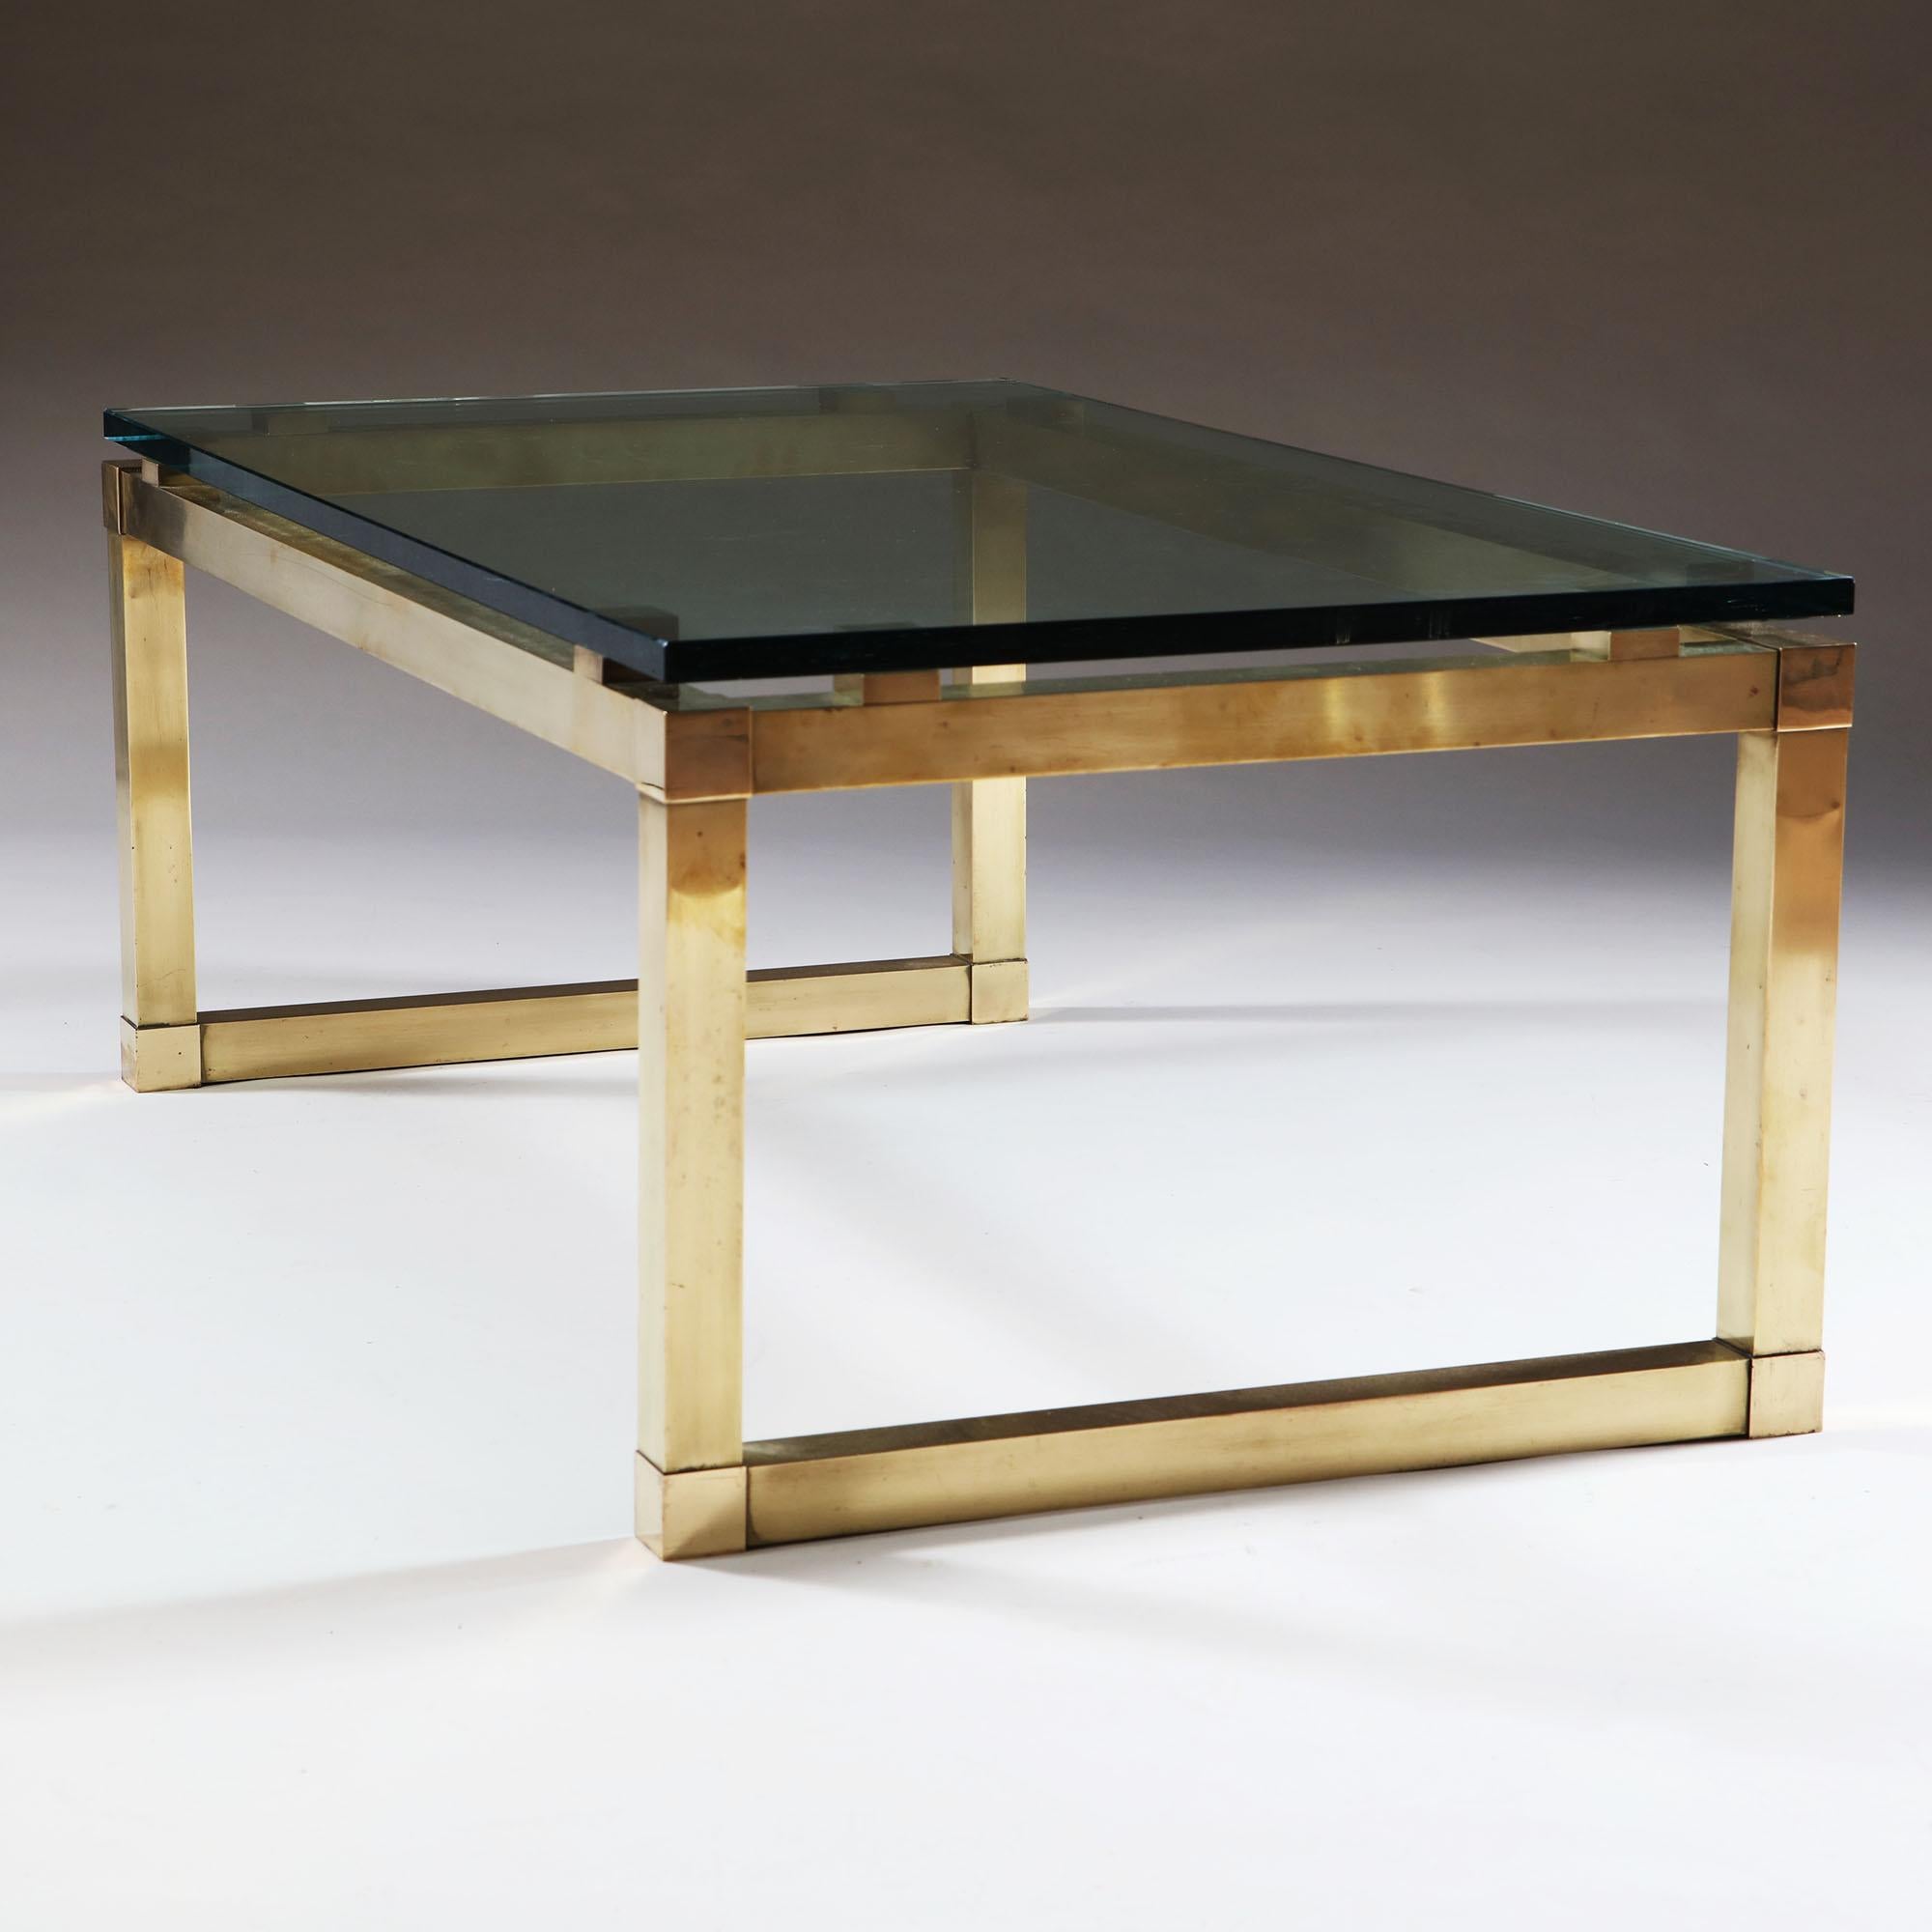 English 20th Century David Hicks Brass Metal Rectangular Coffee Table with Glass Top